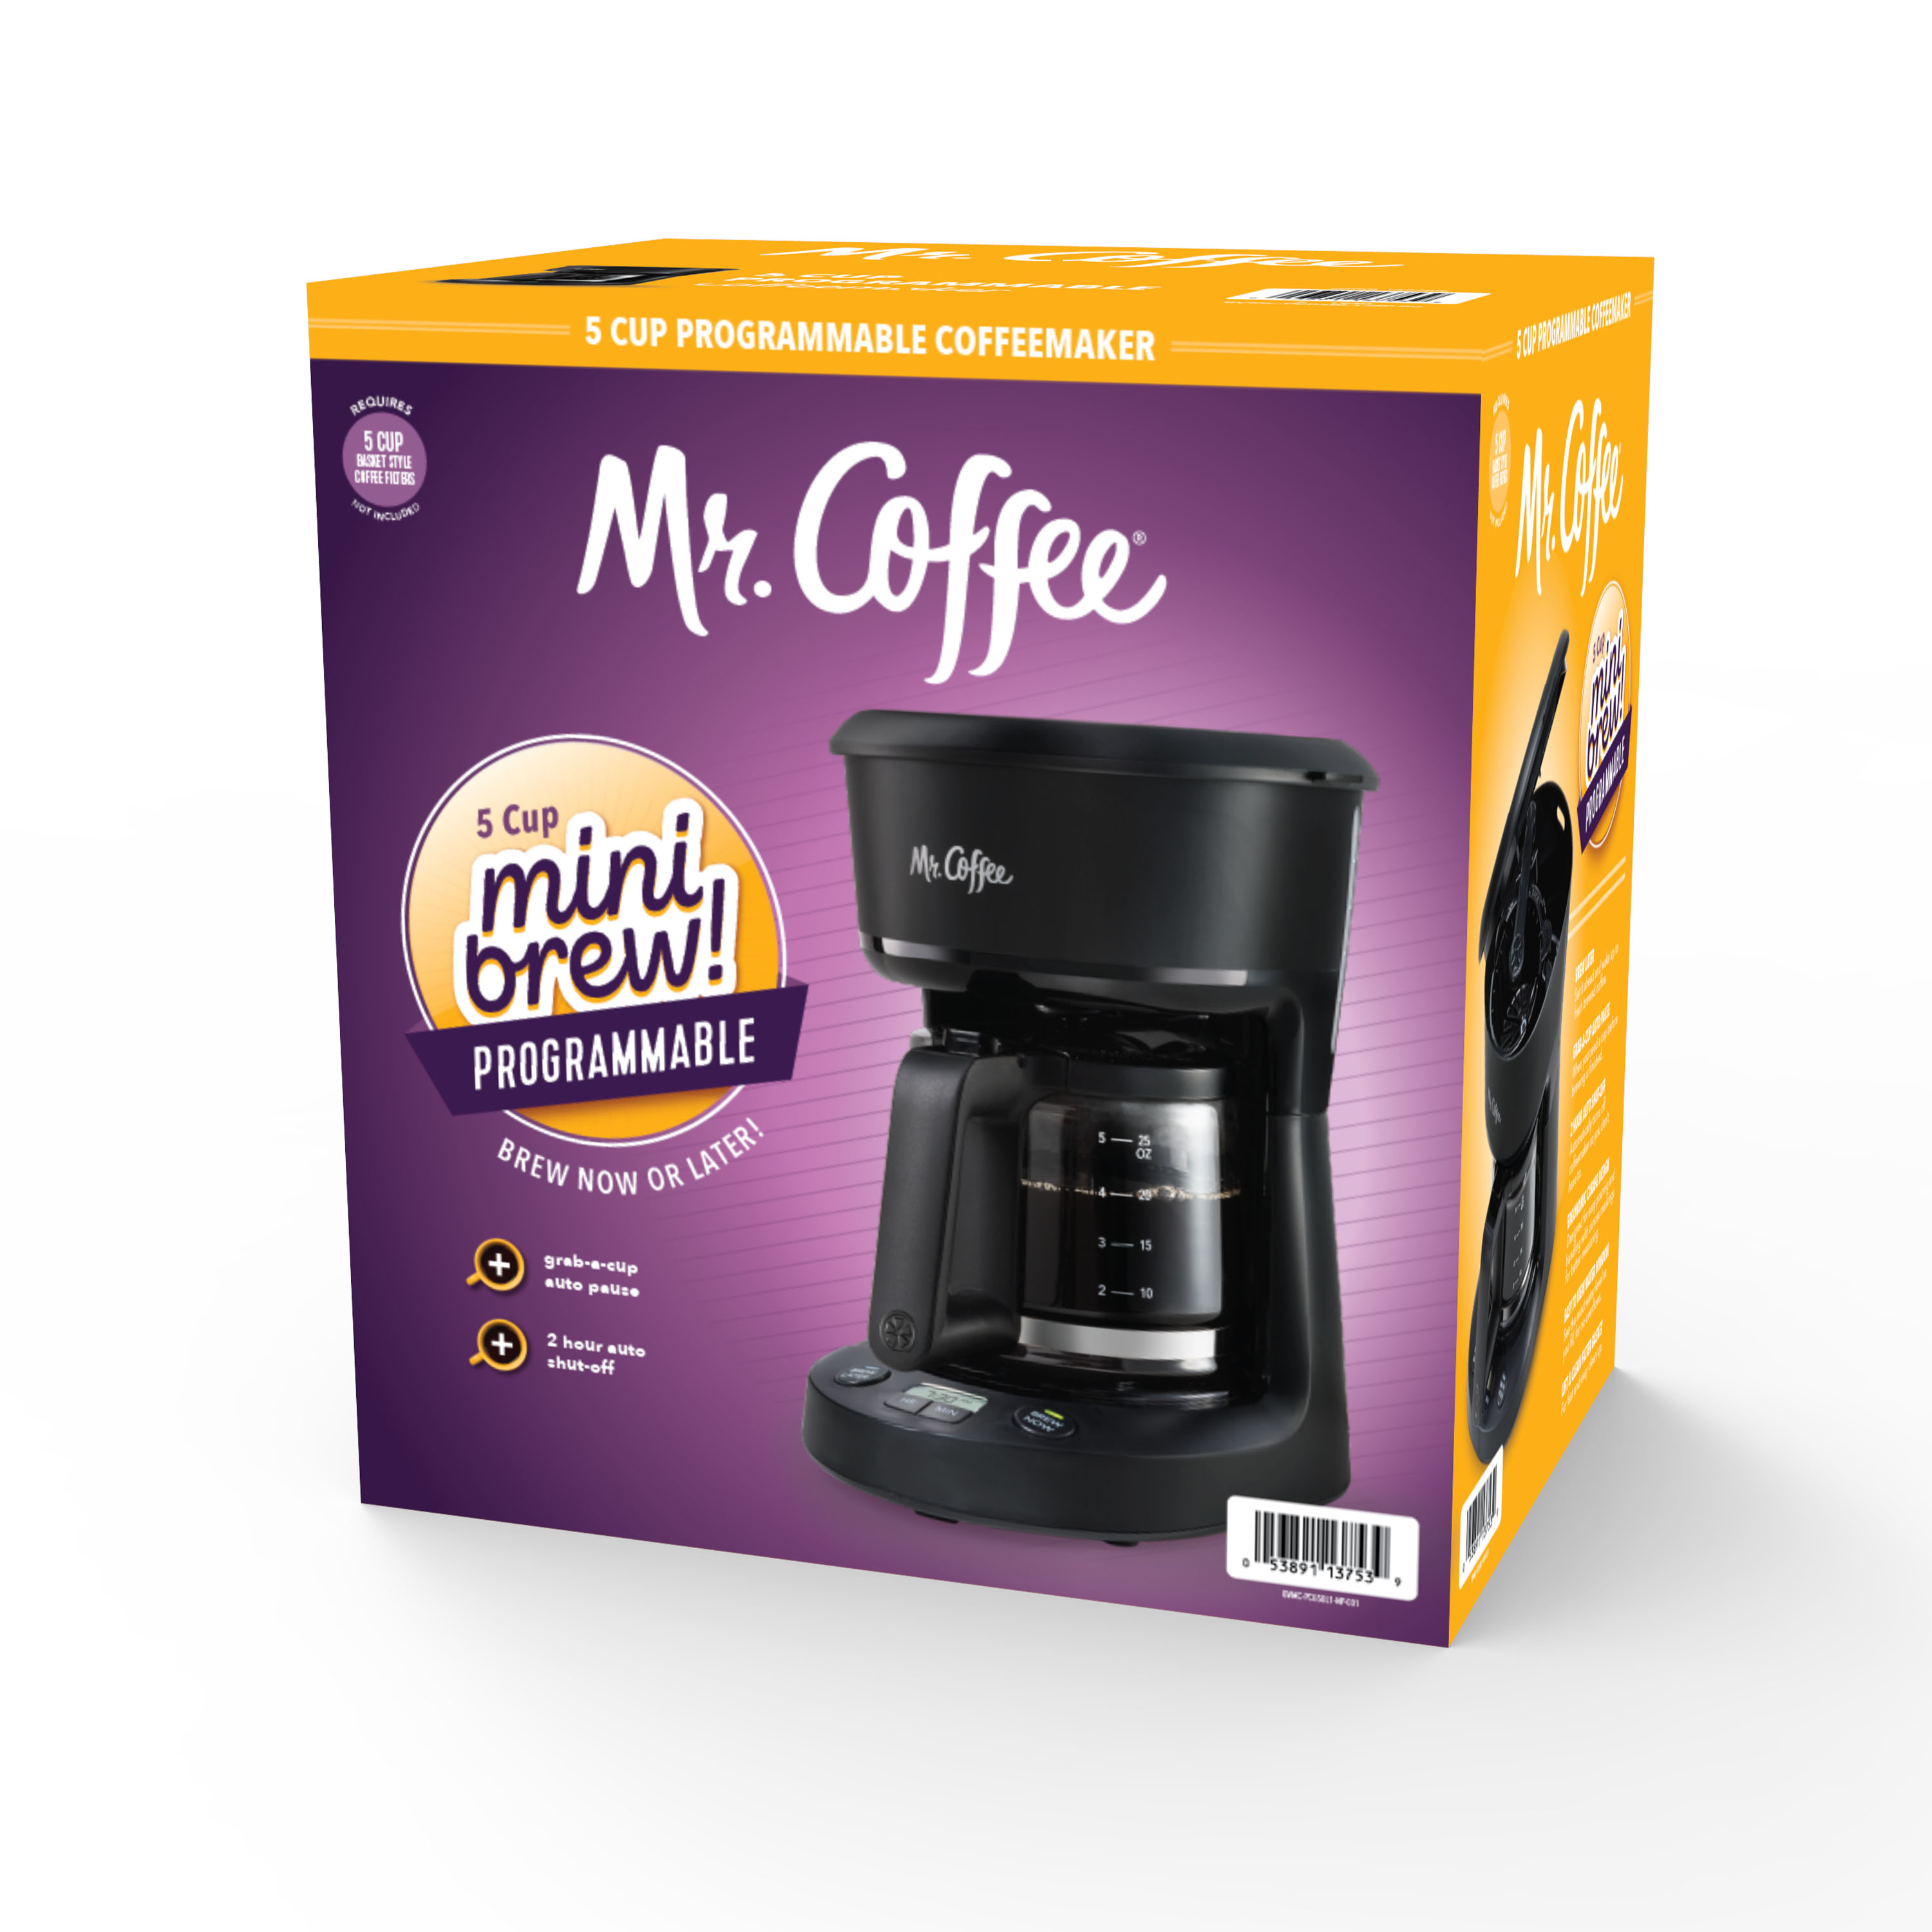 Mr. Coffee 5-Cup Programmable Coffee Maker, 25 oz. Mini Brew, Black - image 3 of 8